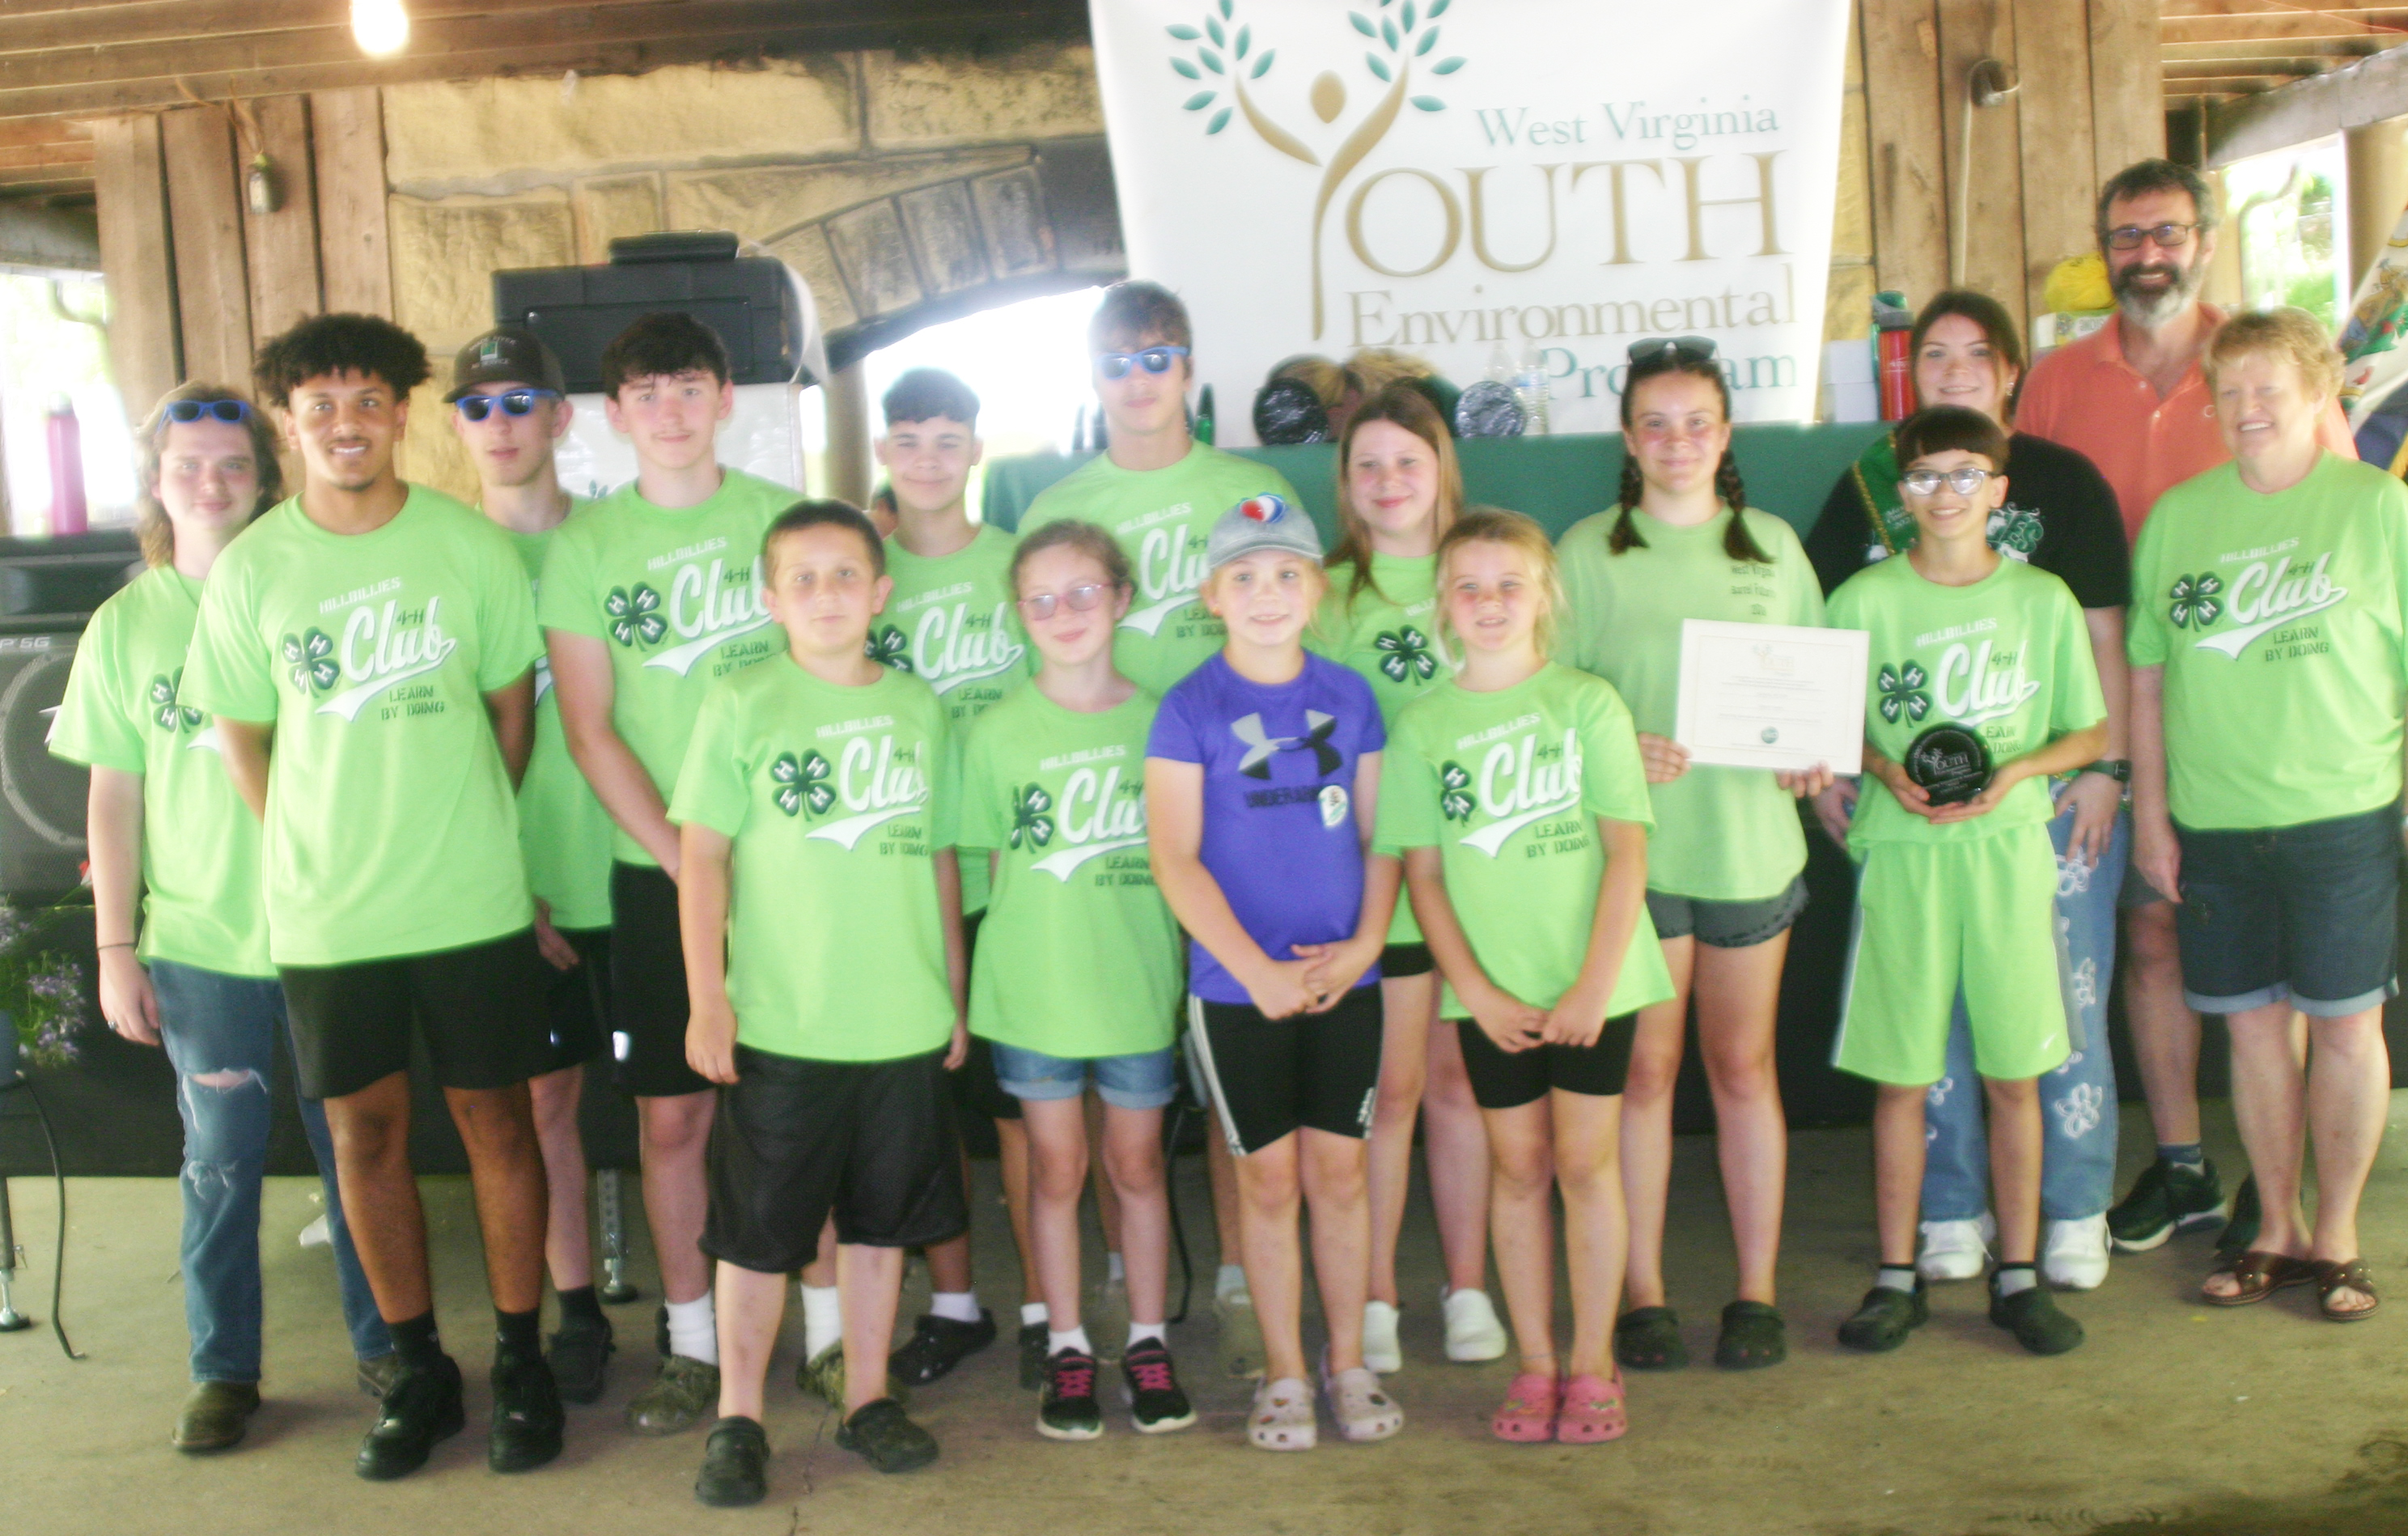 Hillbillie 4-H Club, Mason County, winners of the Recycling Education and Awareness Award